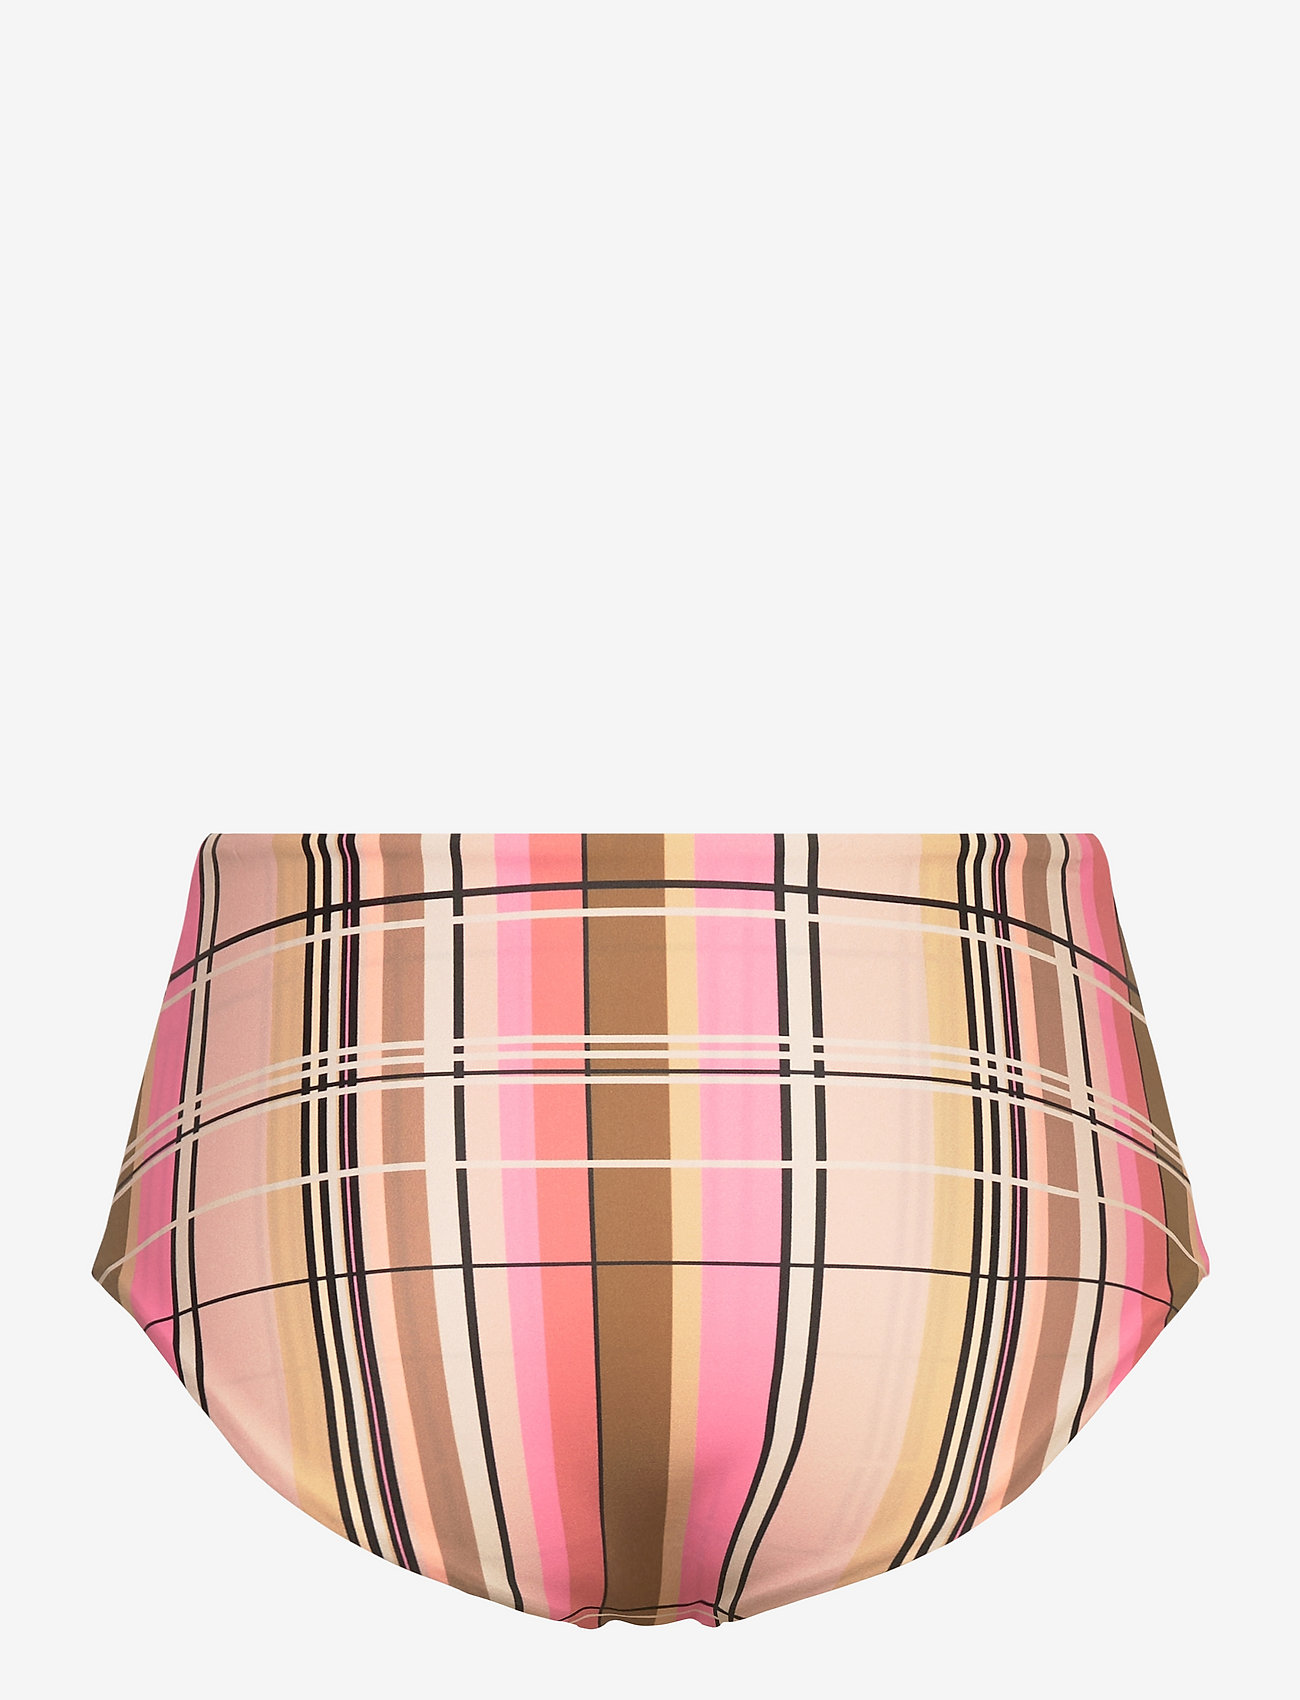 Scampi - PENICHE - bikinibroekjes met hoge taille - multi check pink - 1